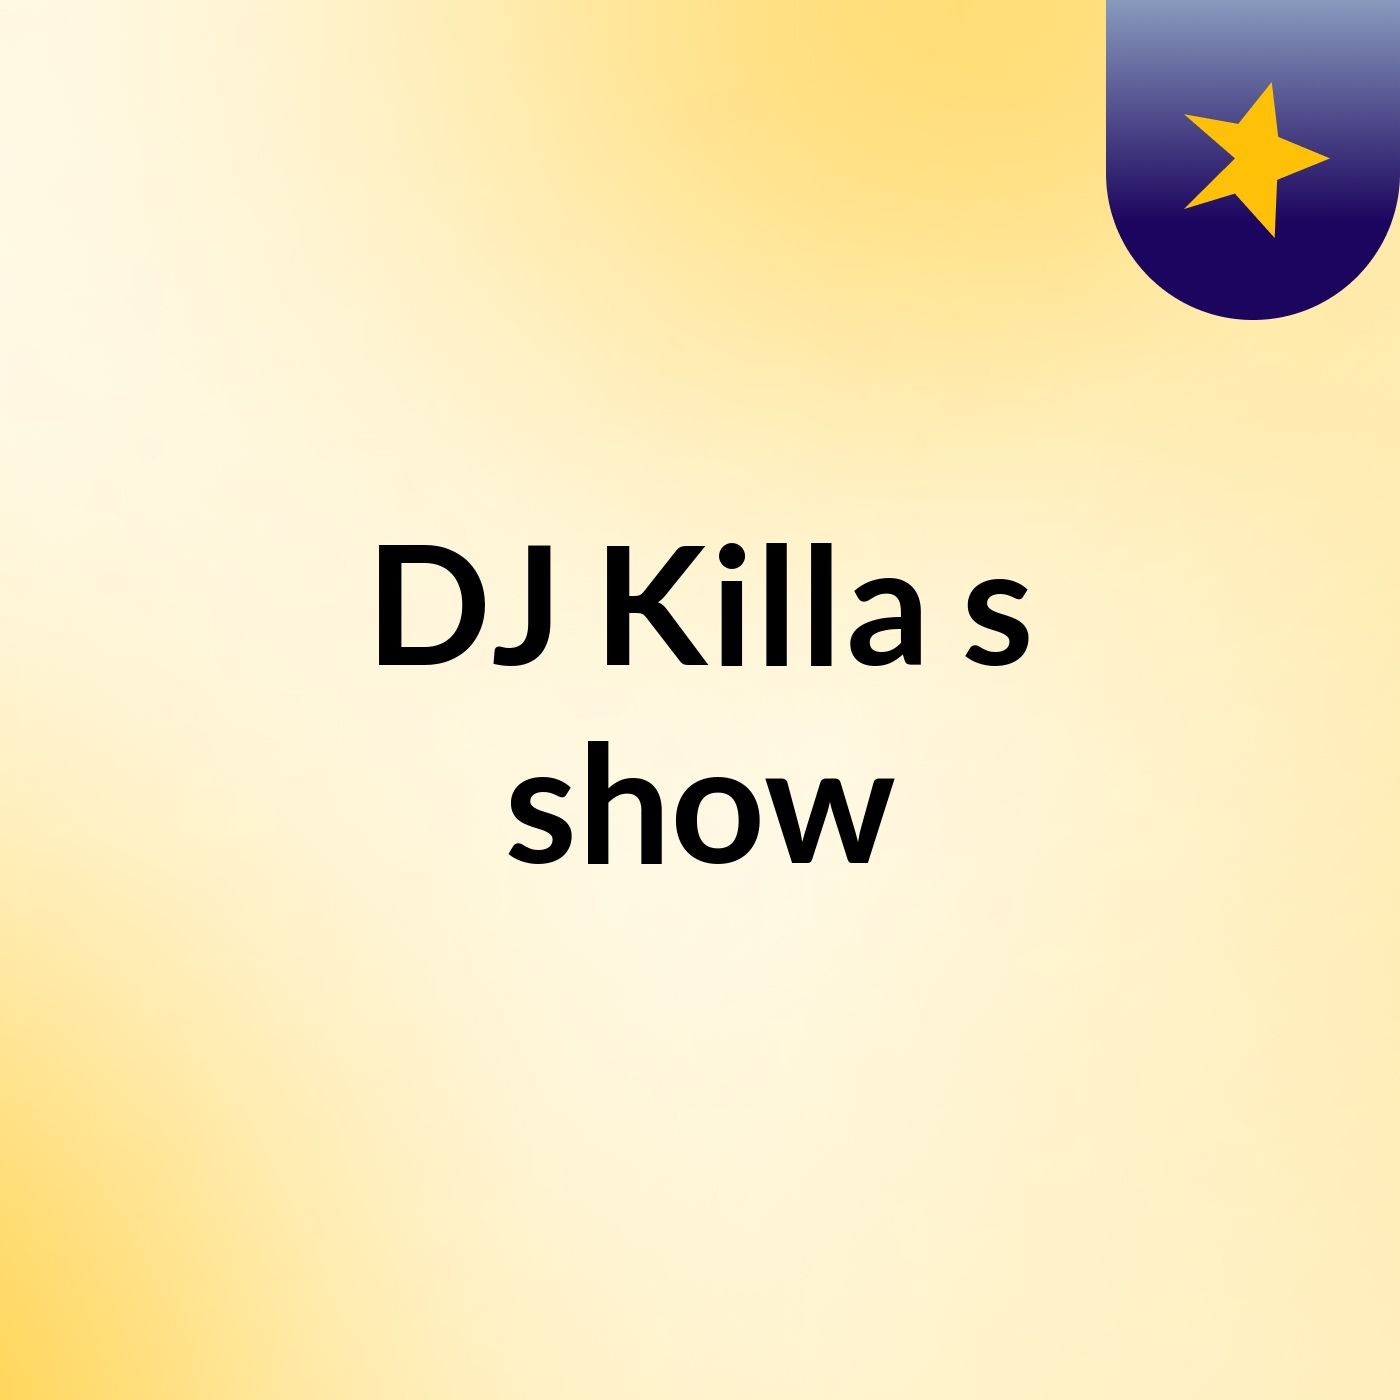 DJ Killa's show